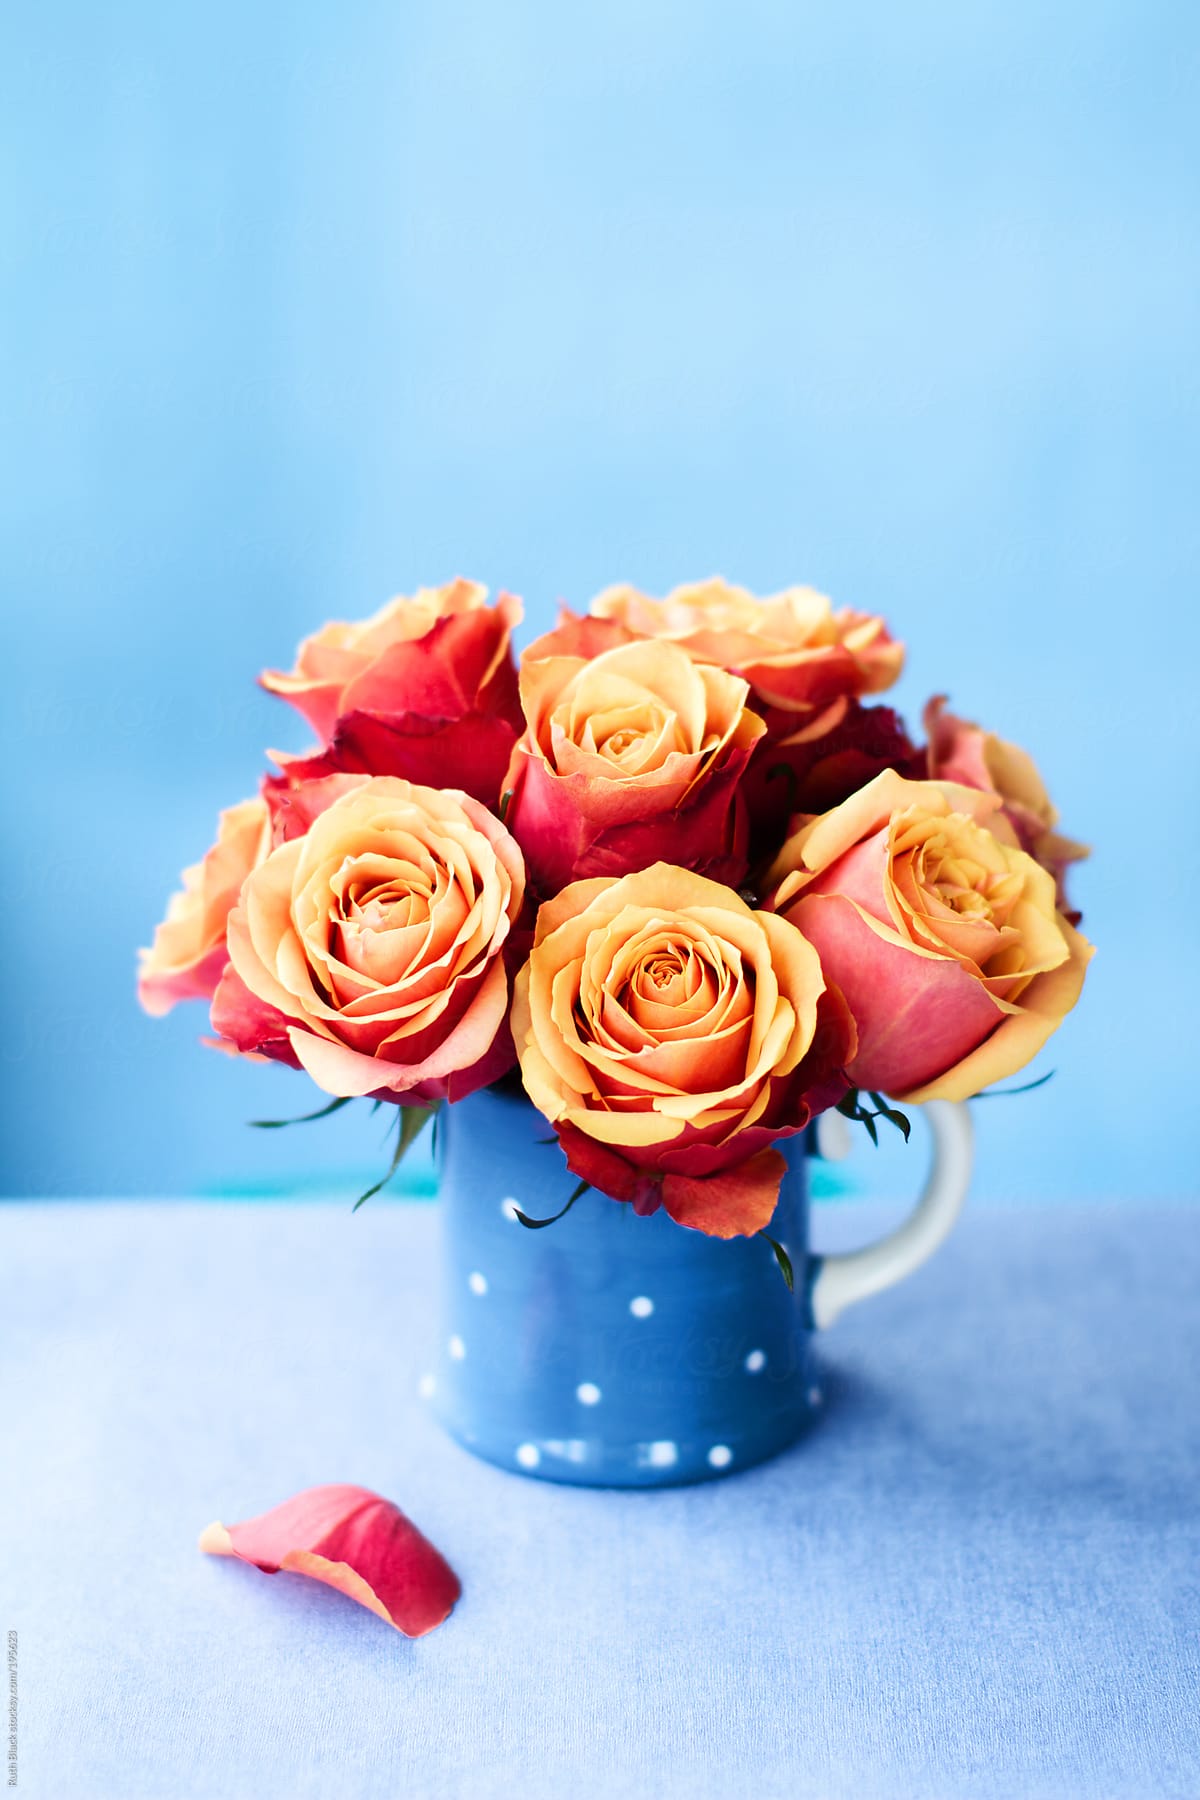 Orange roses in a blue mug